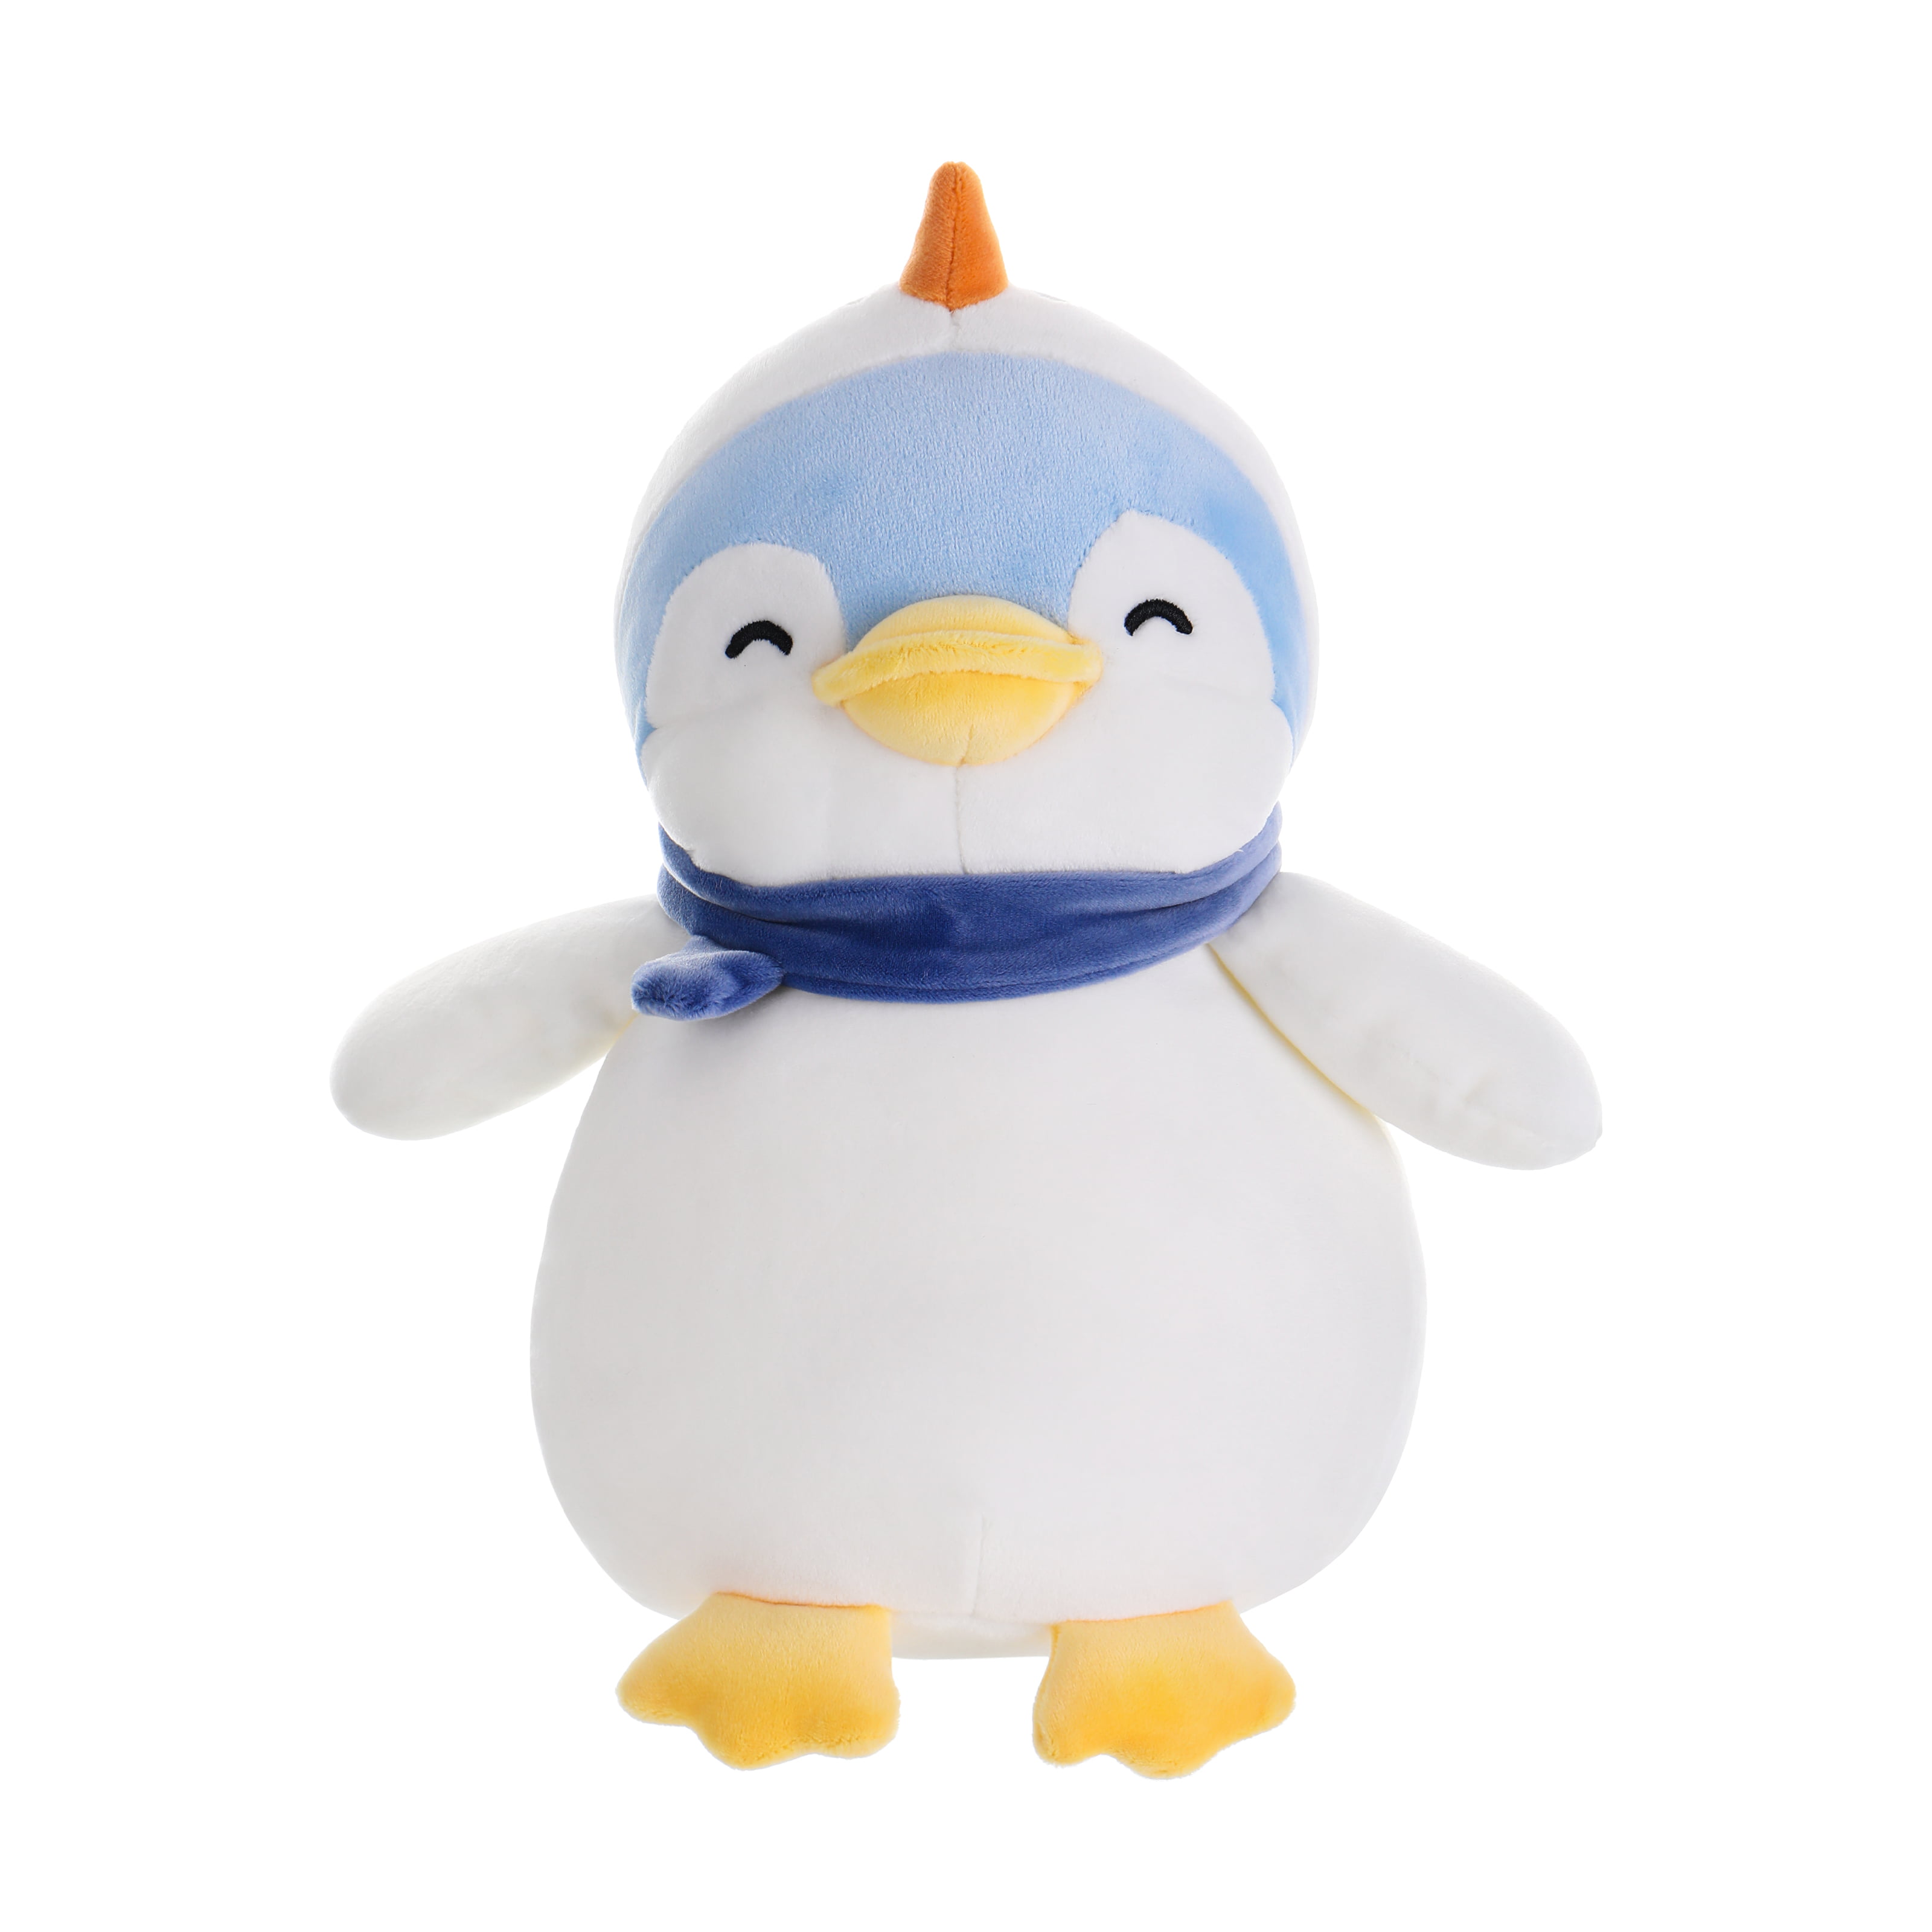 Plush Penguin Stuffed Animal Quality Toy Hot Christmas Gift 2018 